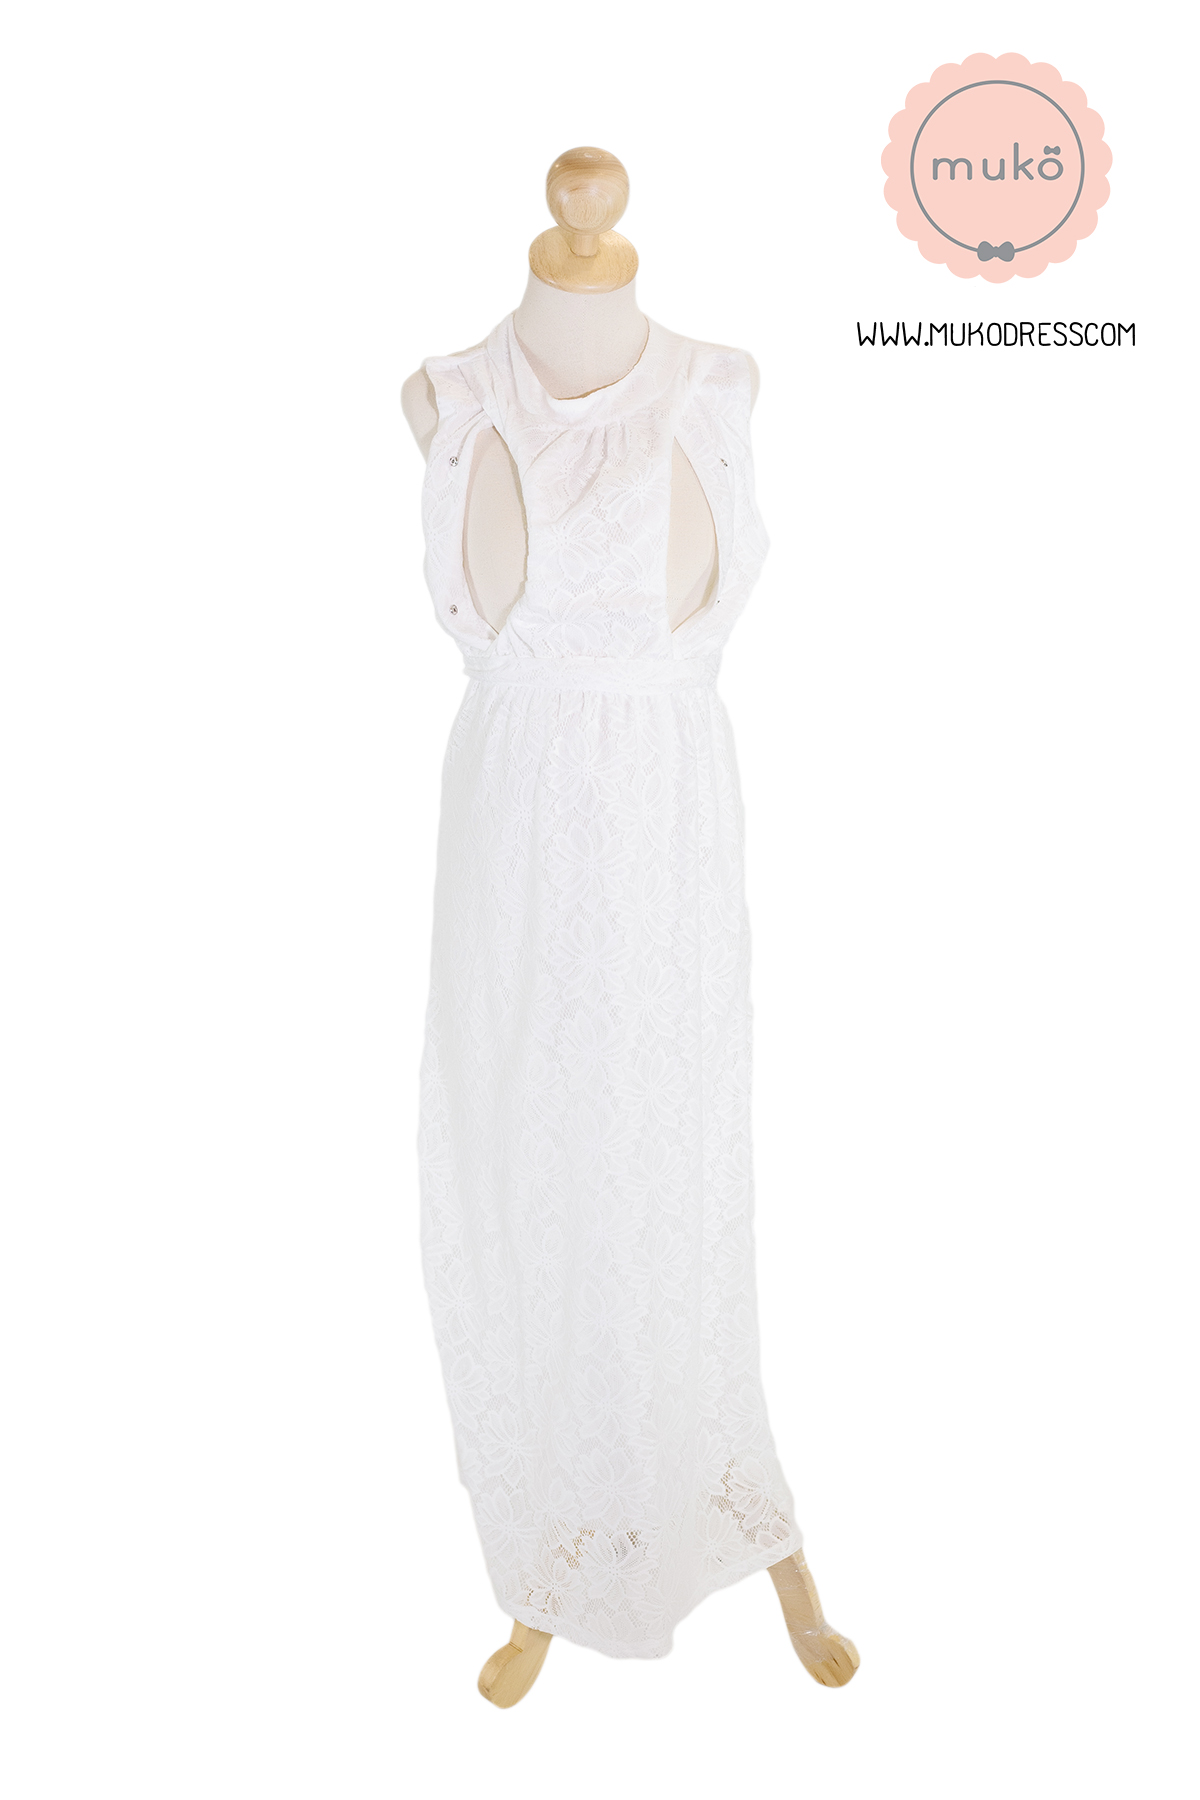 Muko Sarah Lace Dress เดรสเปิดให้นม คลุมท้อง MZ04-006  ขาว